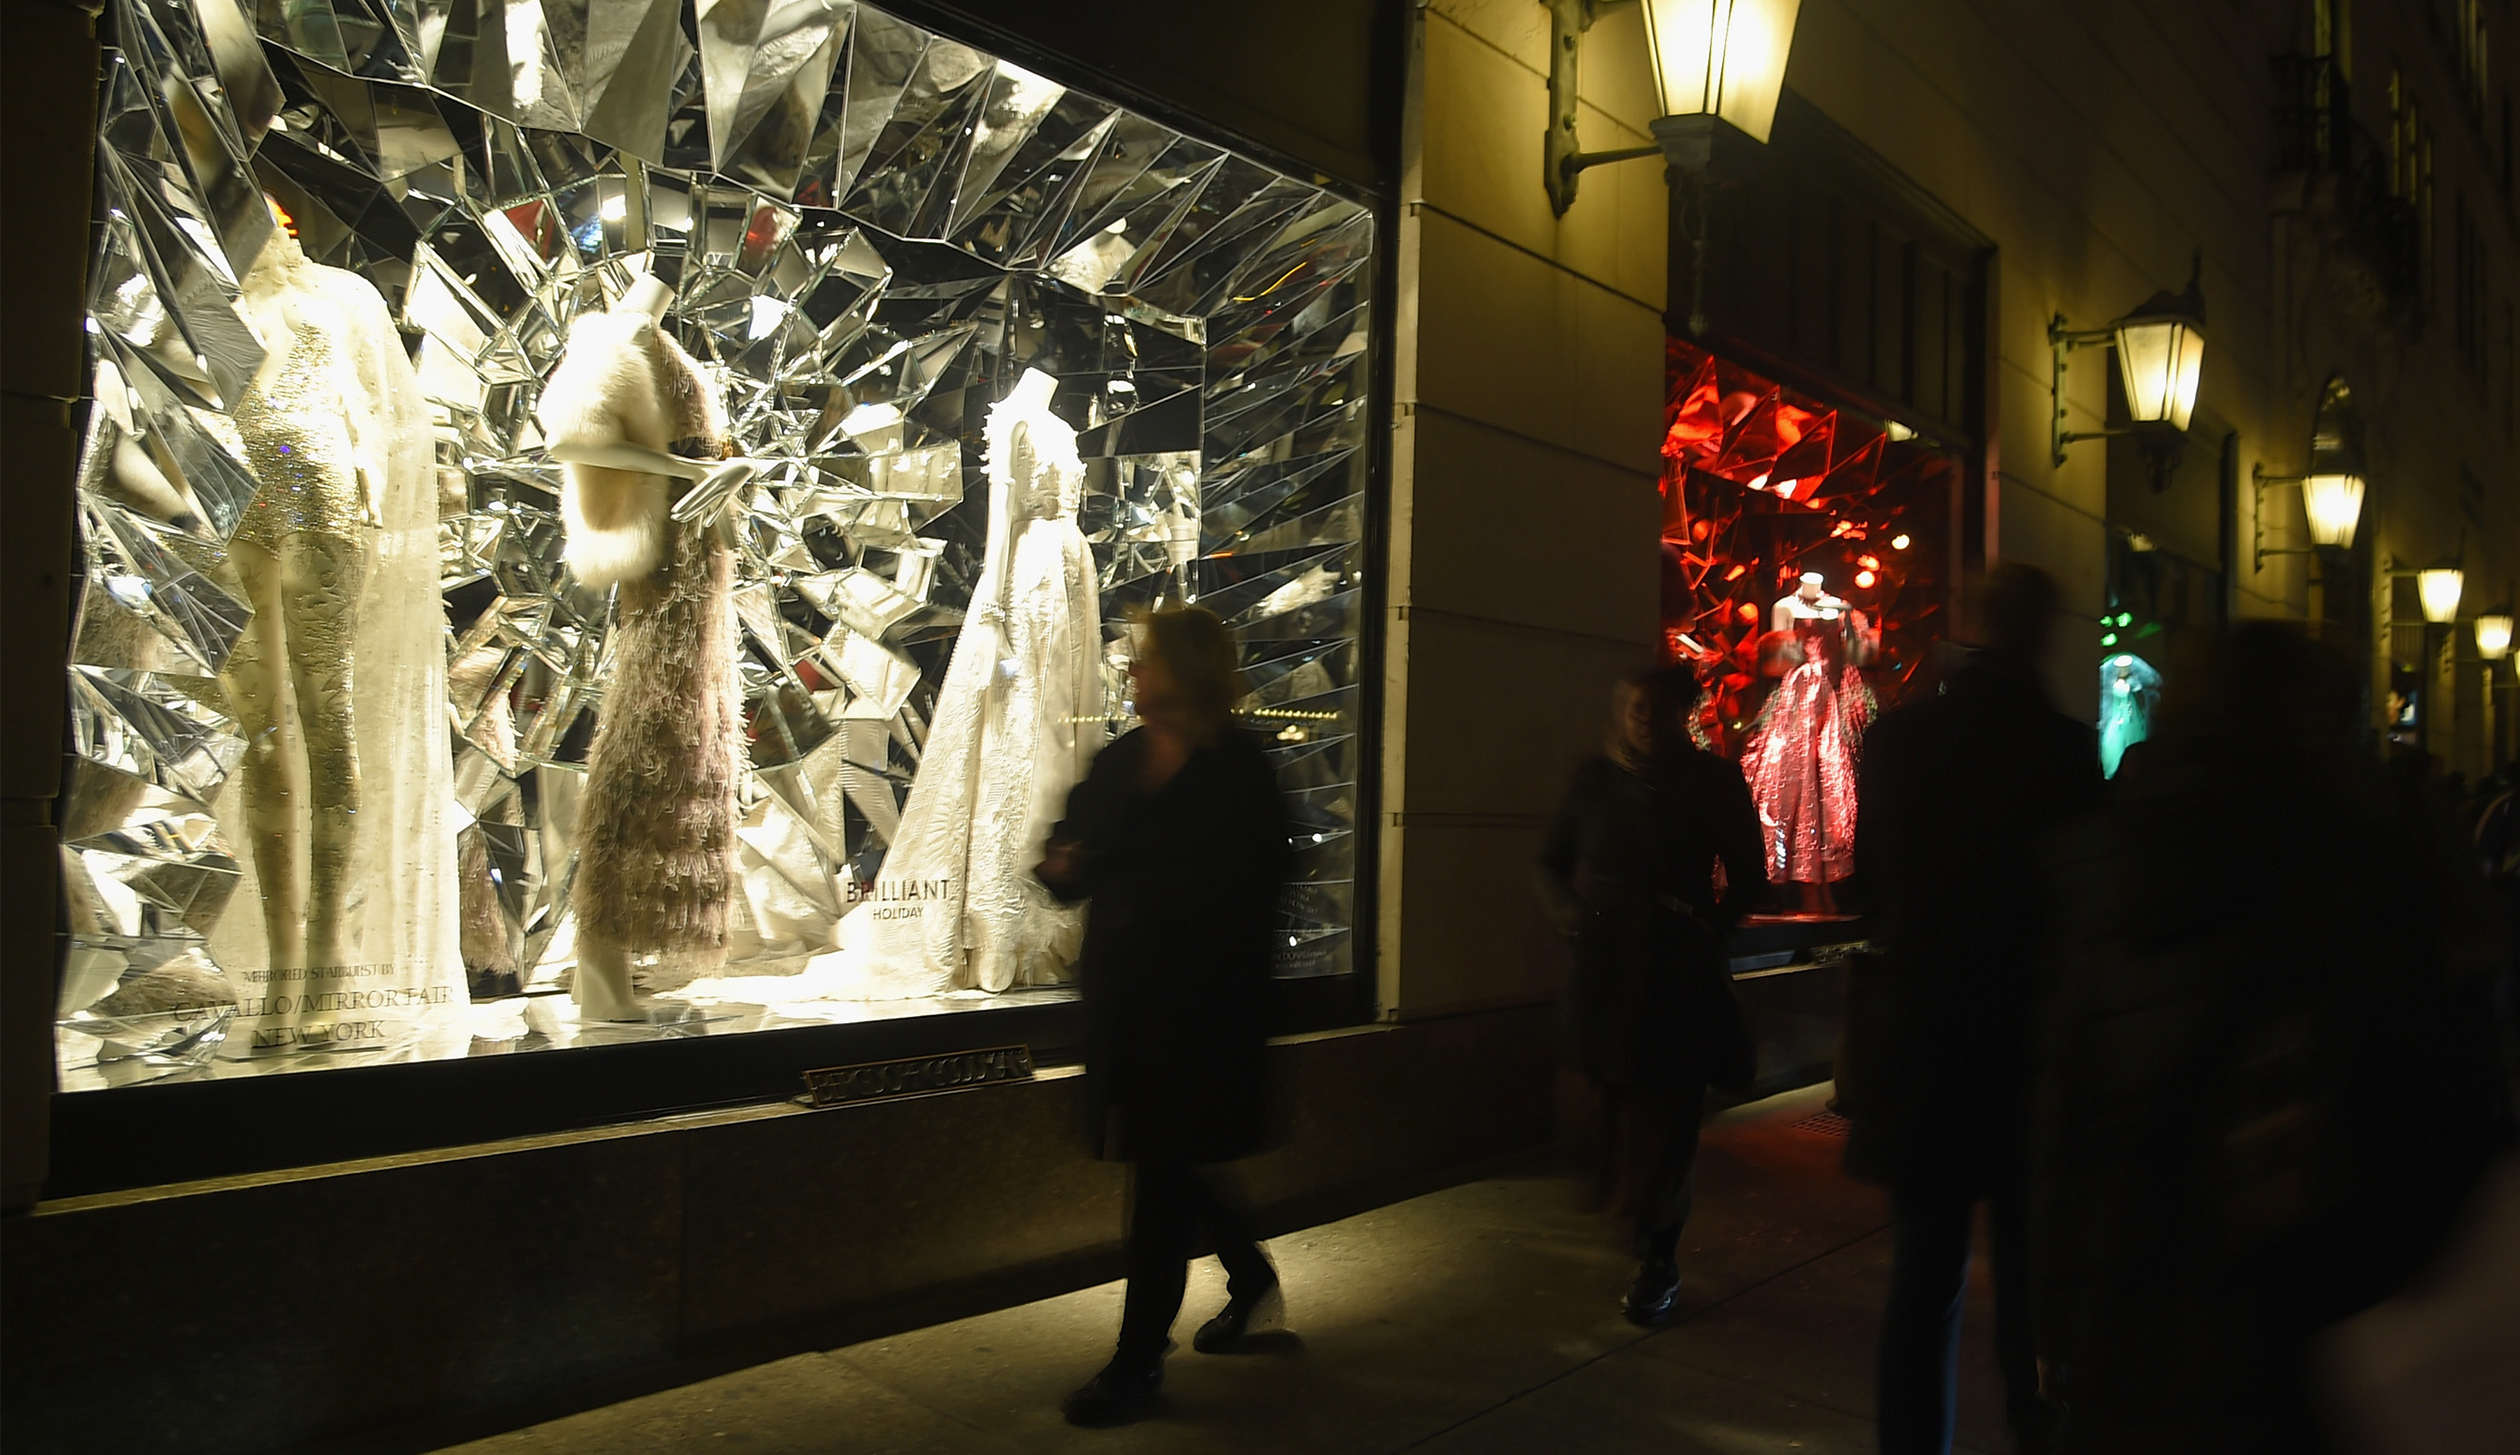 NYC: Bergdorf Goodman's 2008 Holiday window display